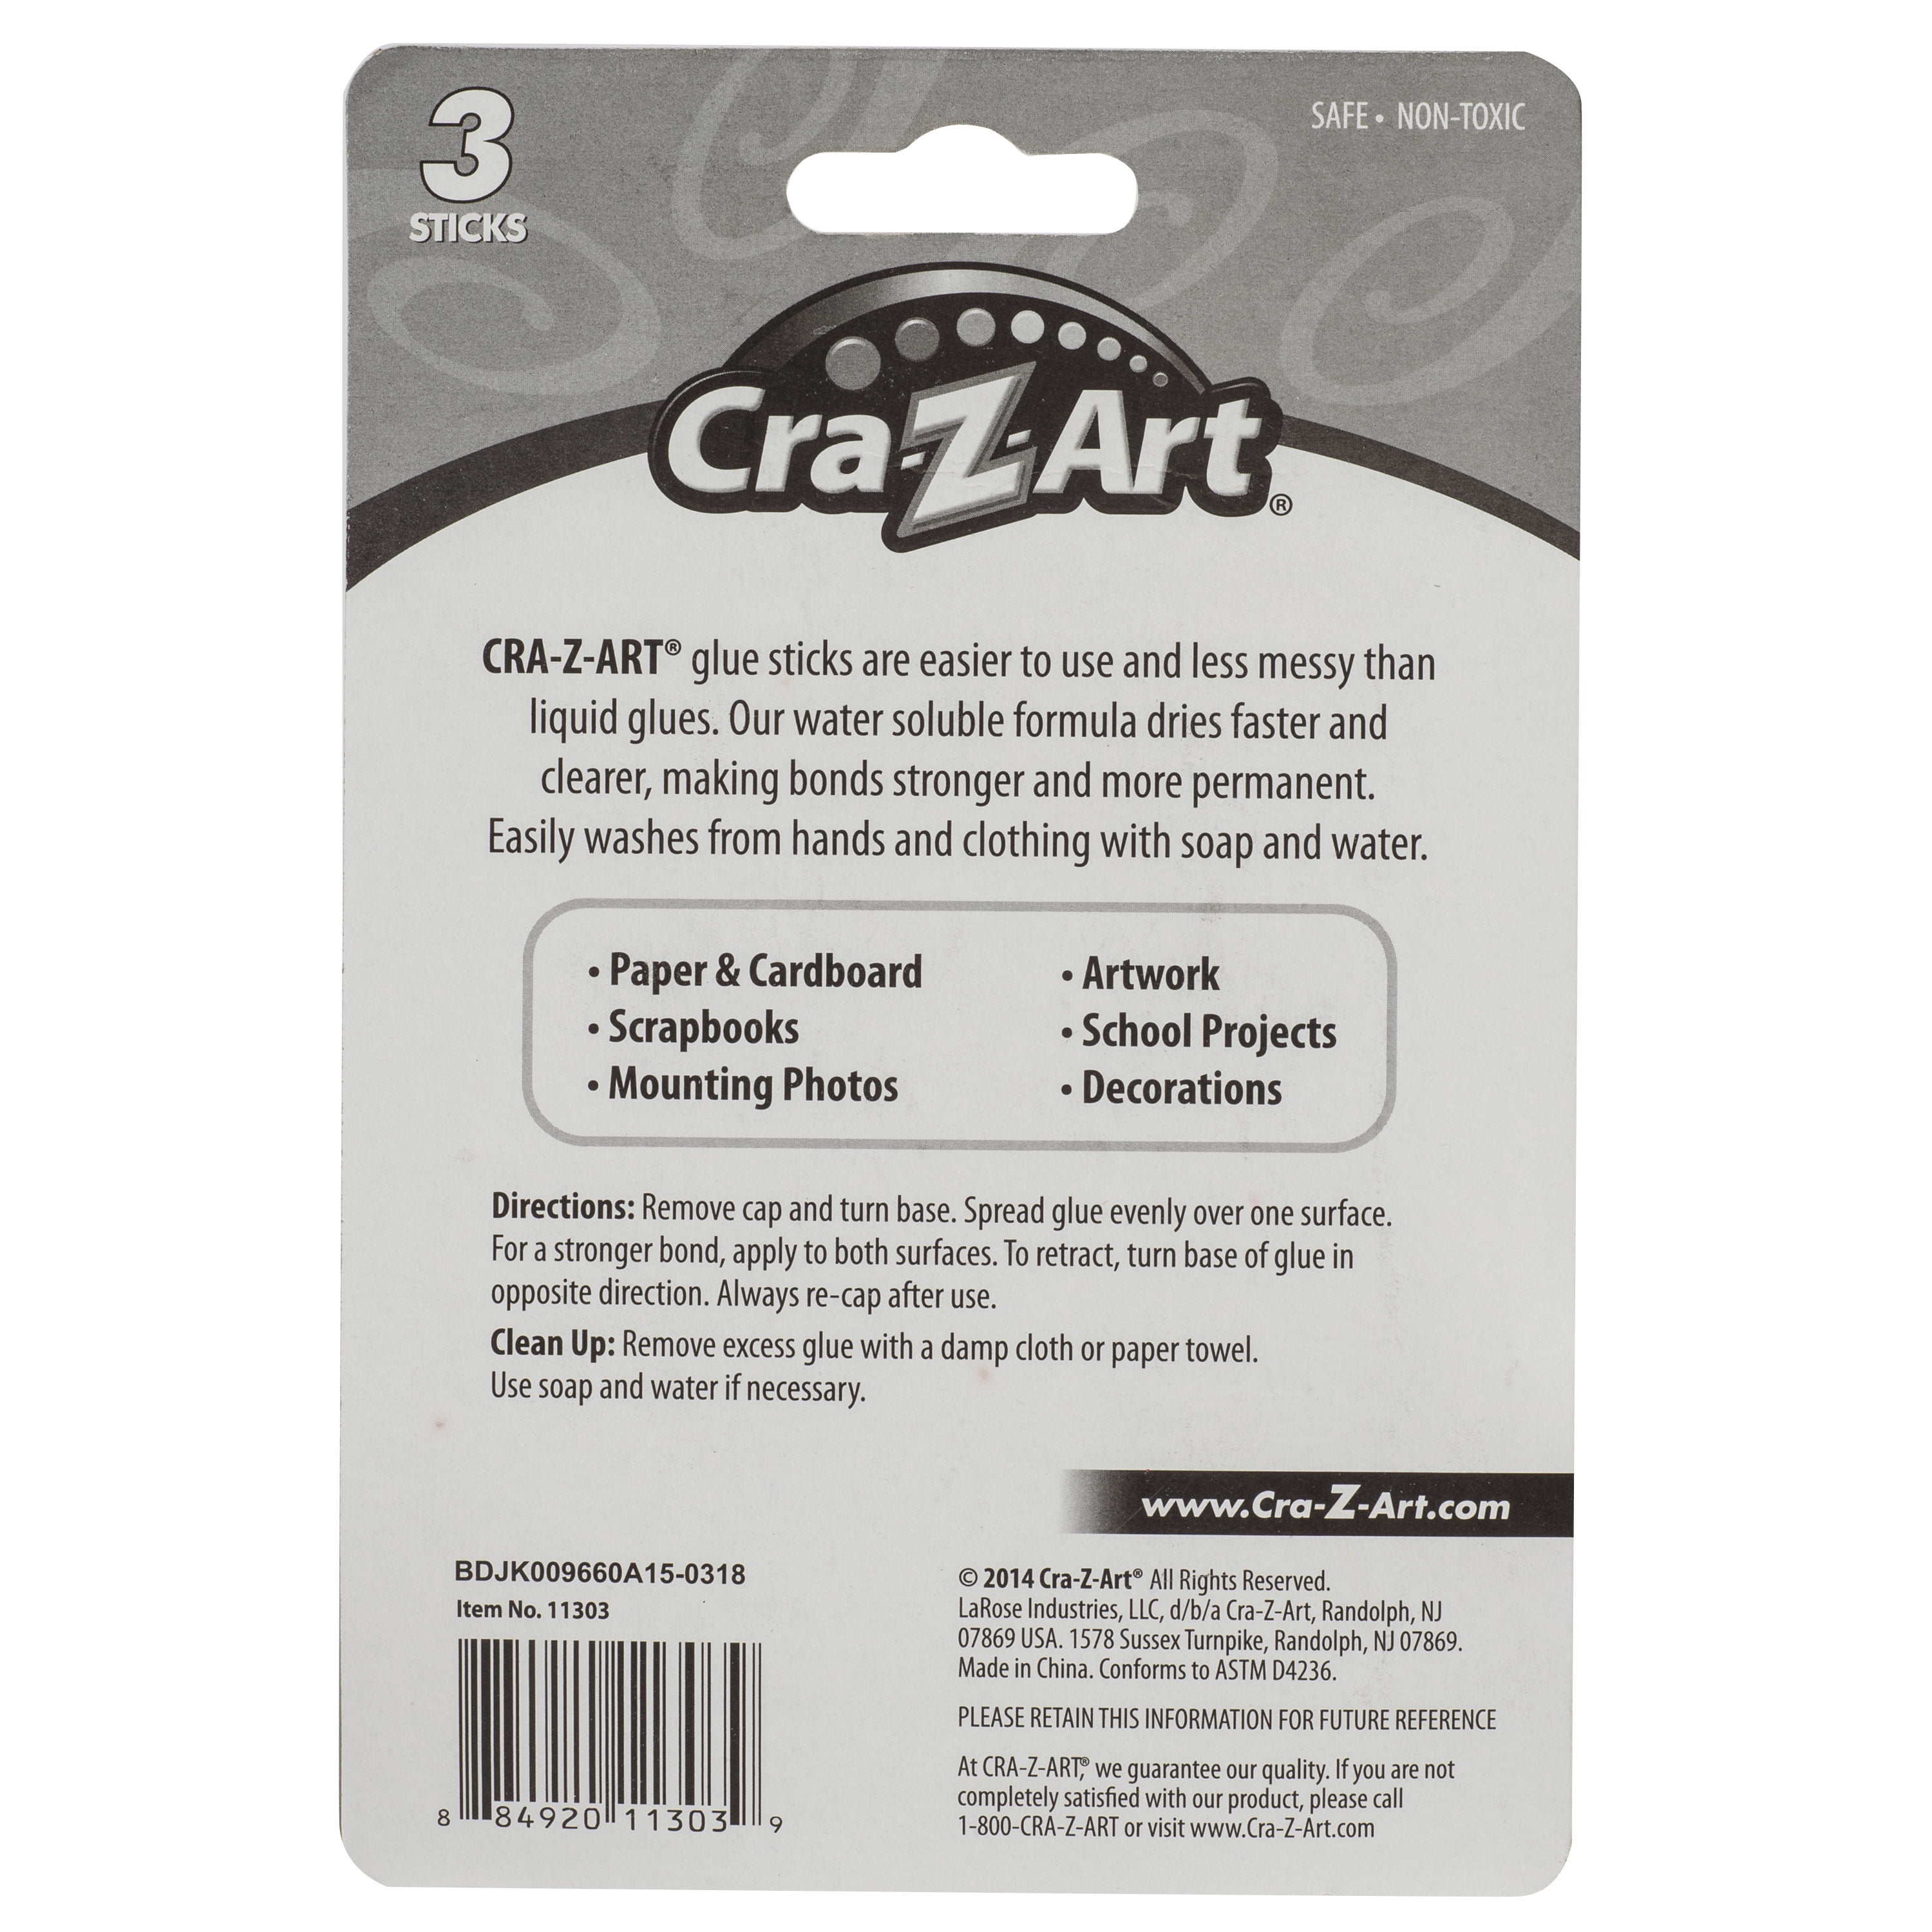 Cra-Z-art Washable School Glue, 4 oz, 1 Bottle (11302)